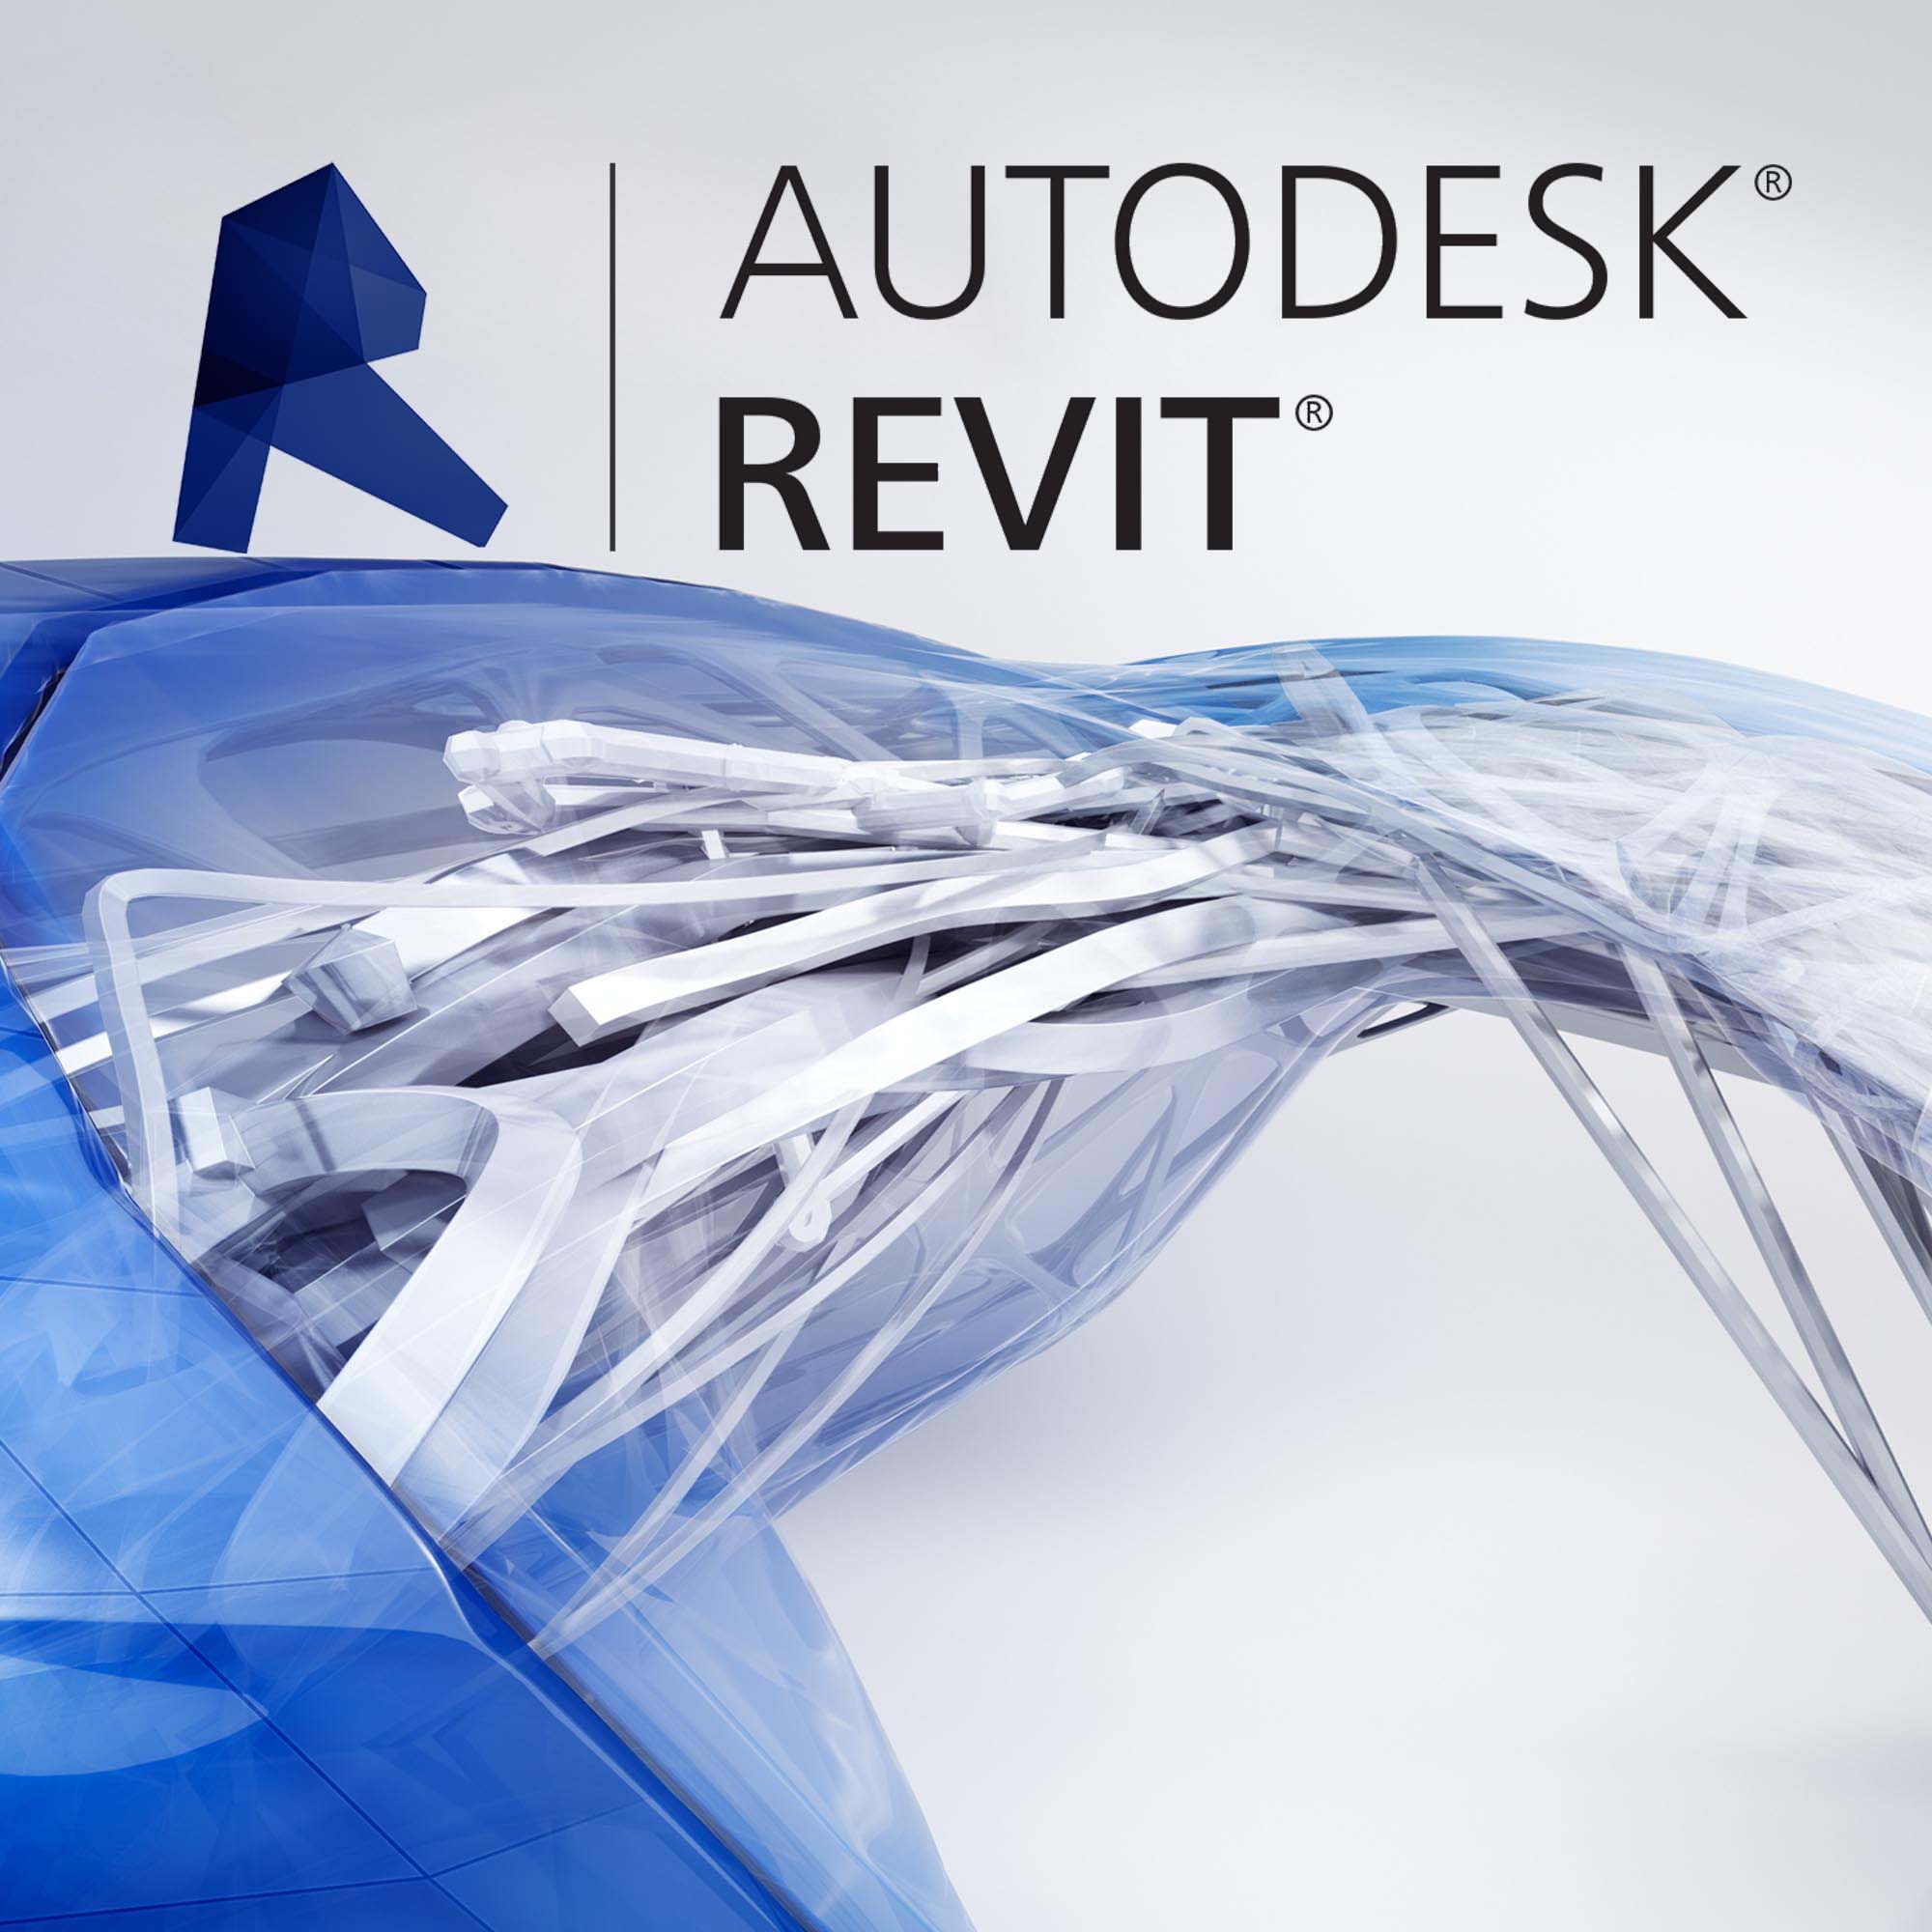 Autodesk architecture. Autodesk Revit 2022. Ревит автодеск. Pevit. Autodesk Revit Architecture.